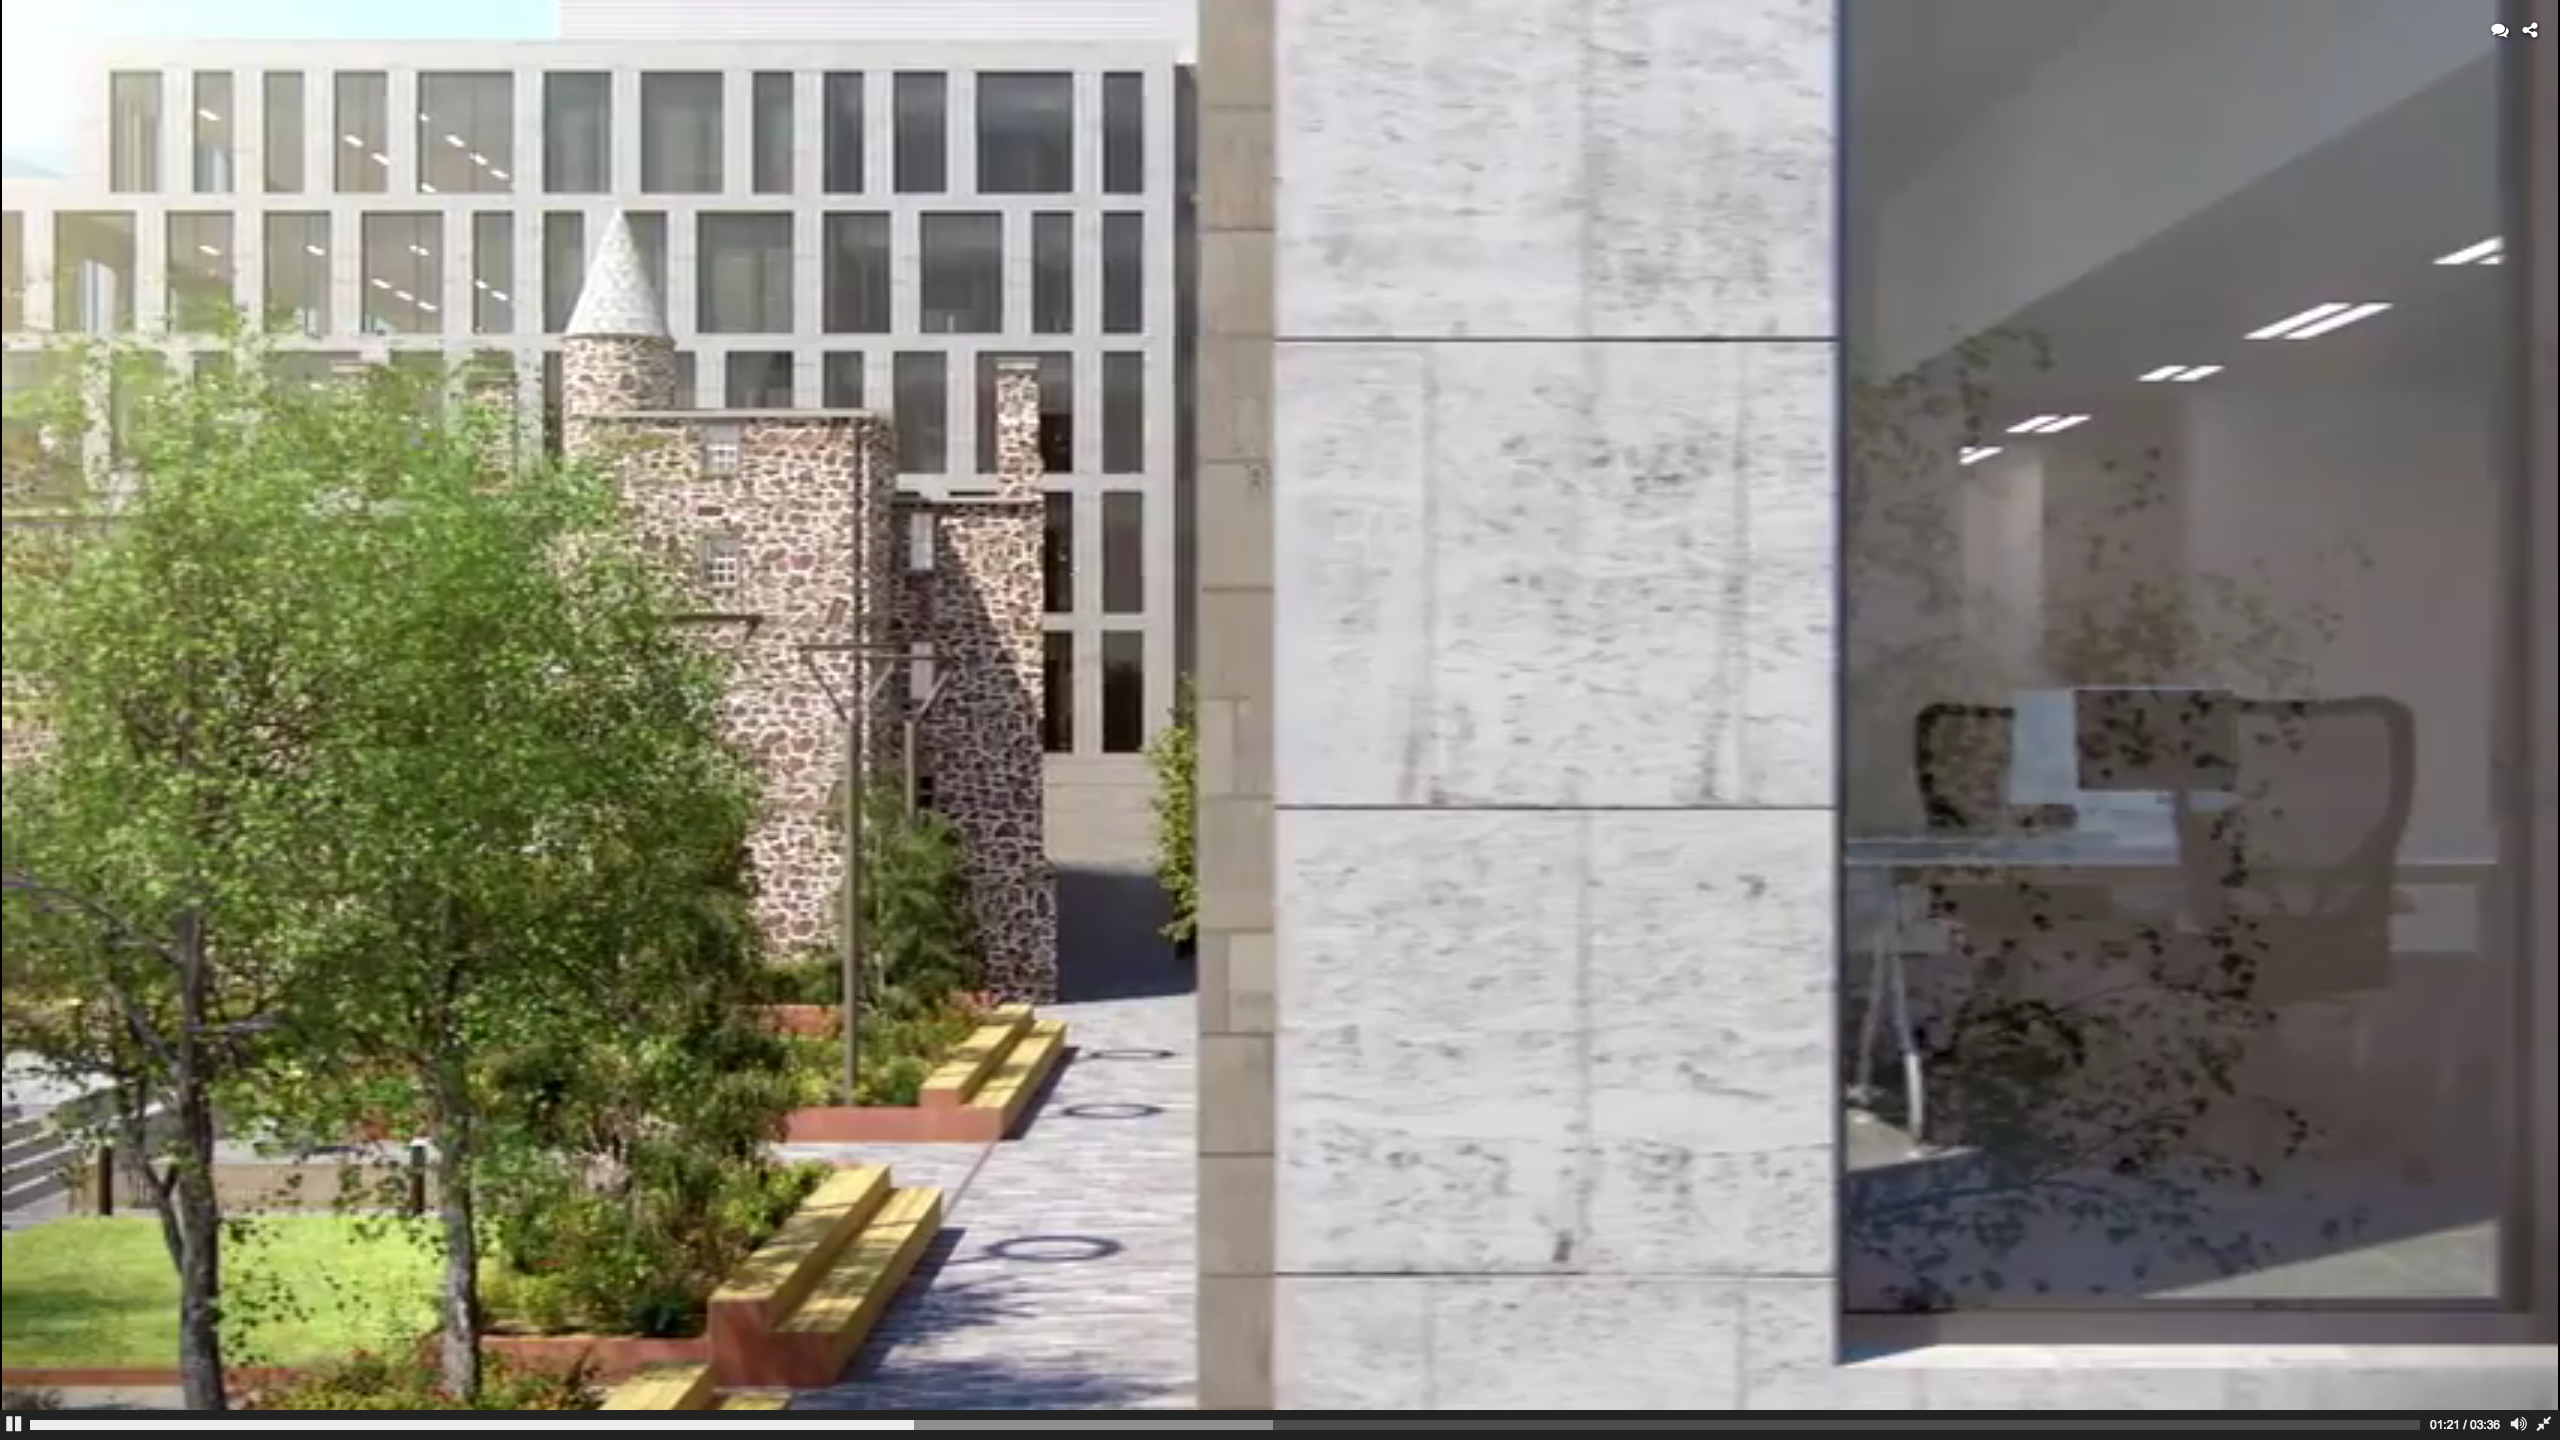 A screenshot from the new Marischal Square development video